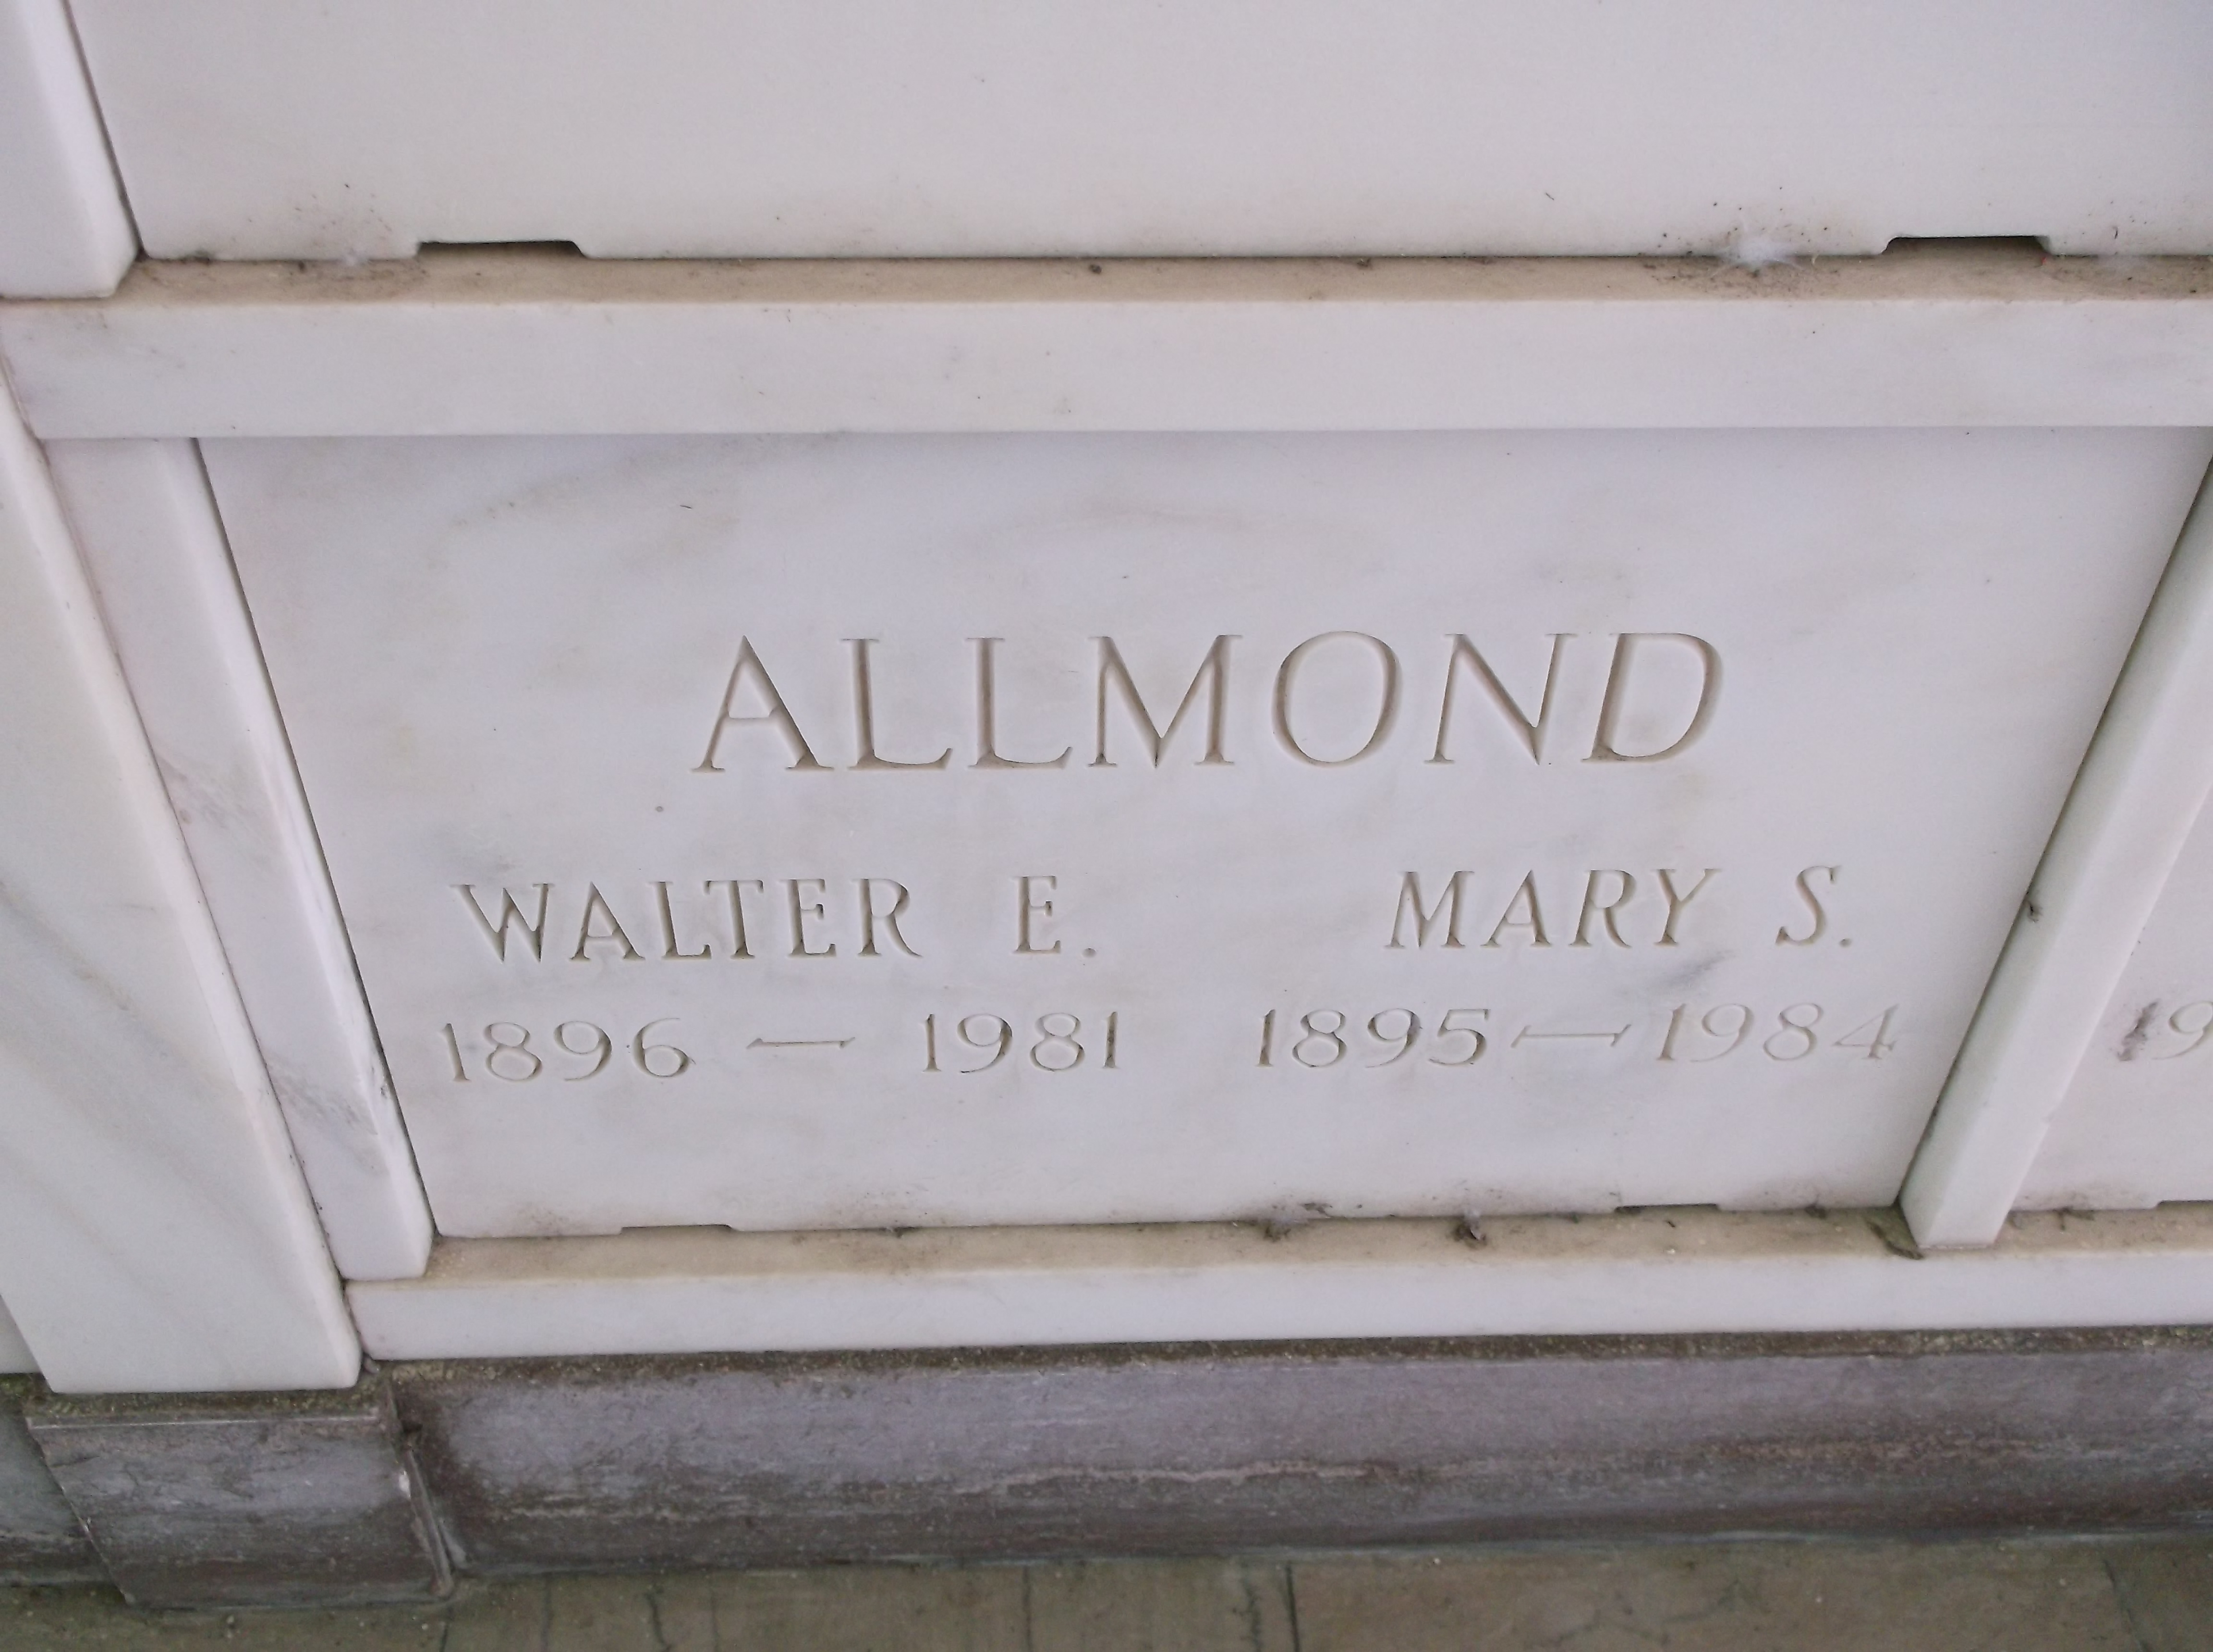 Mary S Allmond